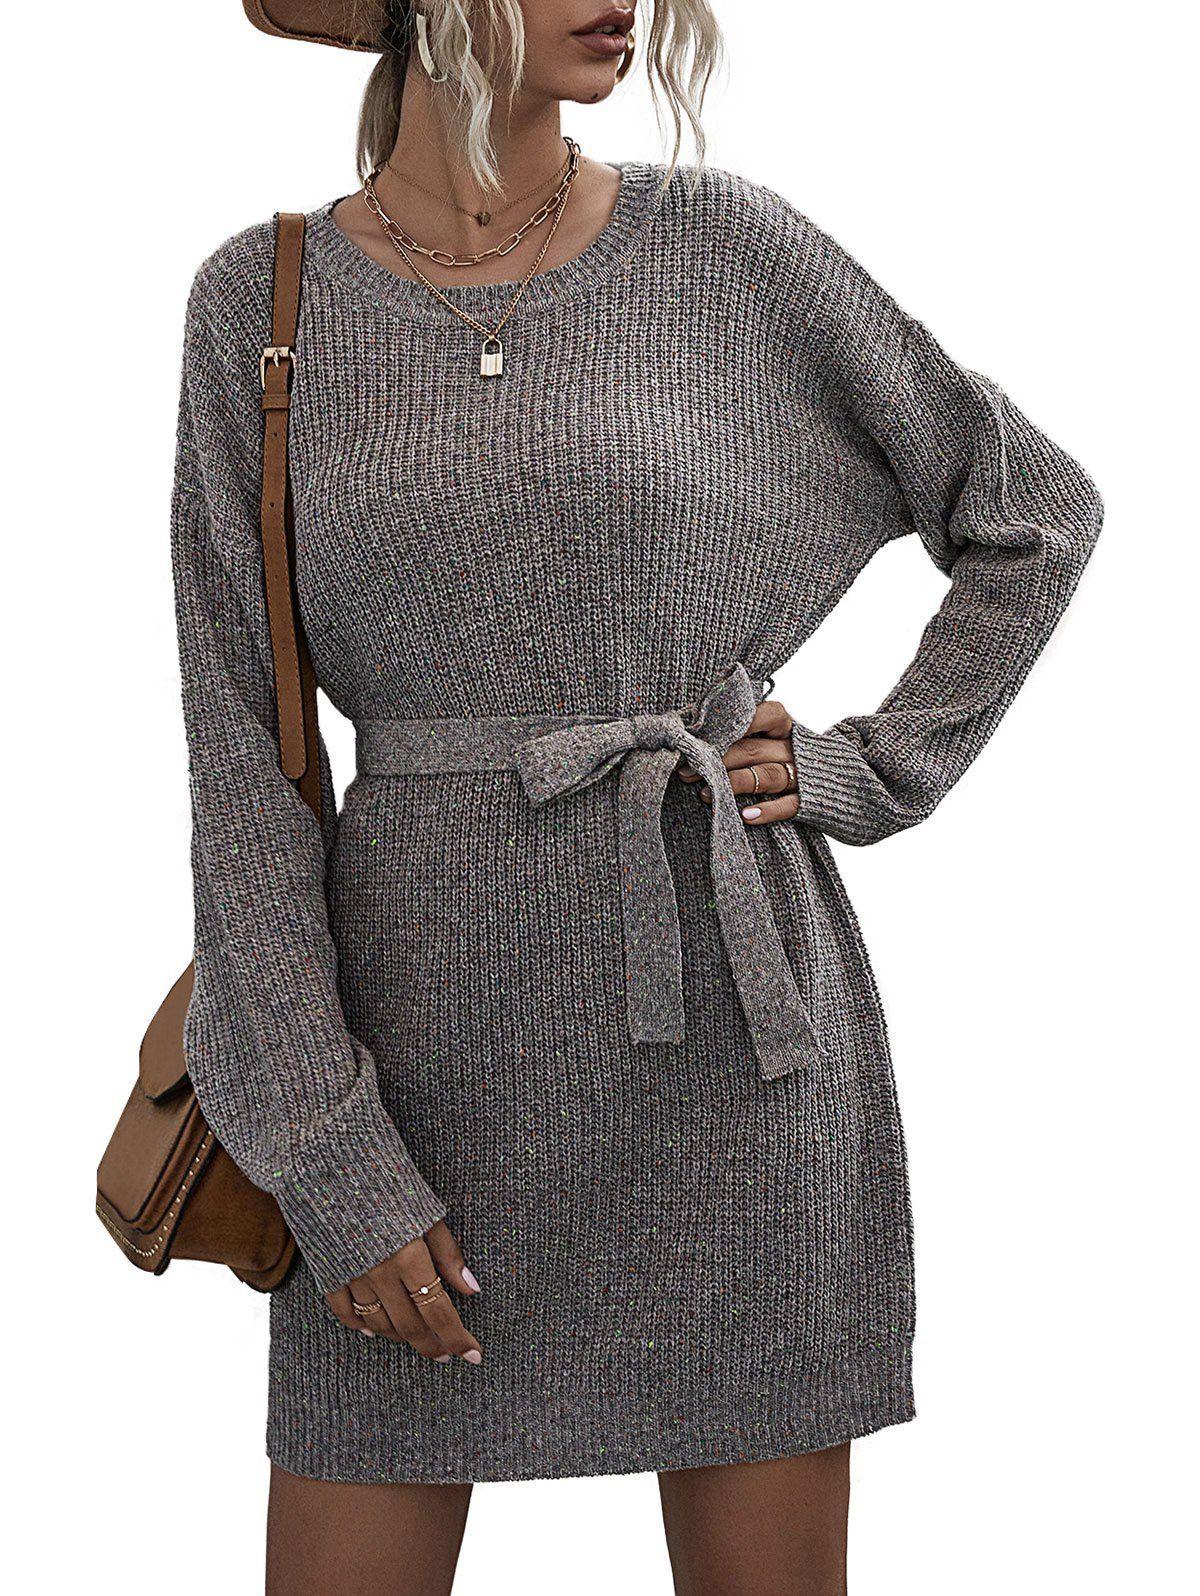 Heathered Belt Sweater Dress - GRAY S